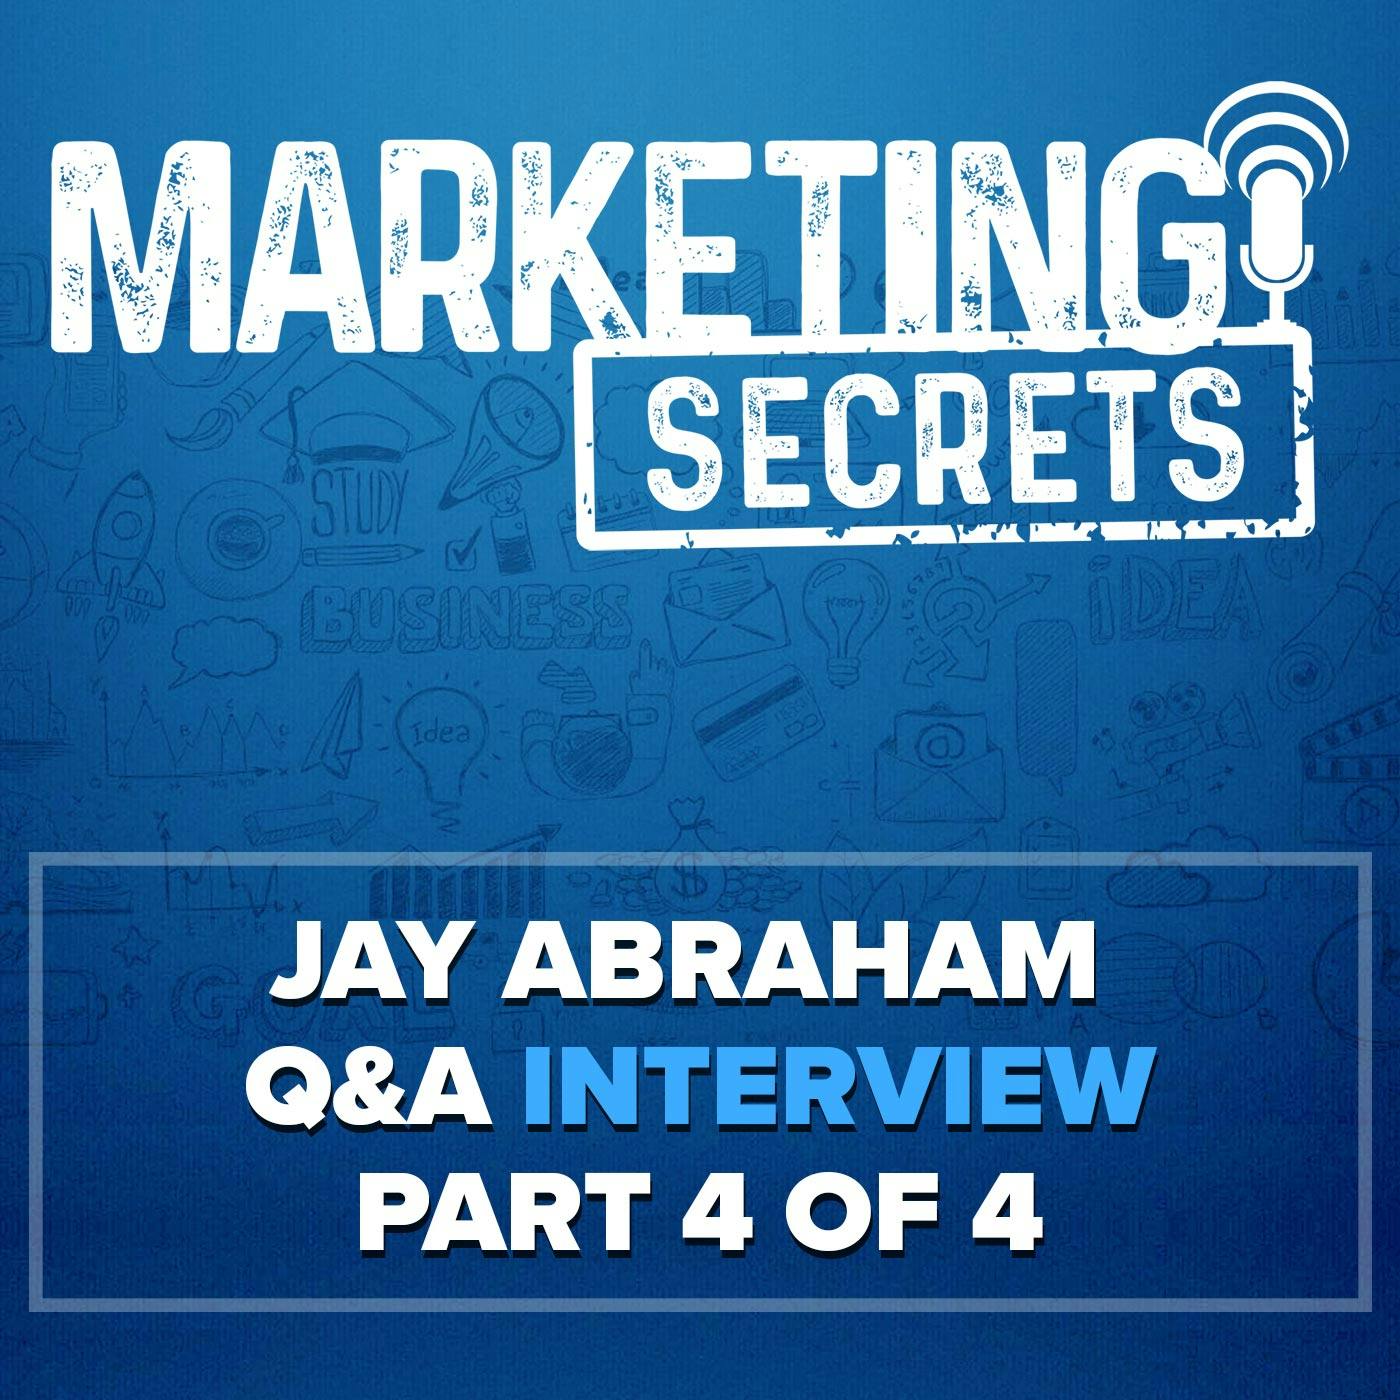 Jay Abraham Q&A Interview - Part 4 of 4